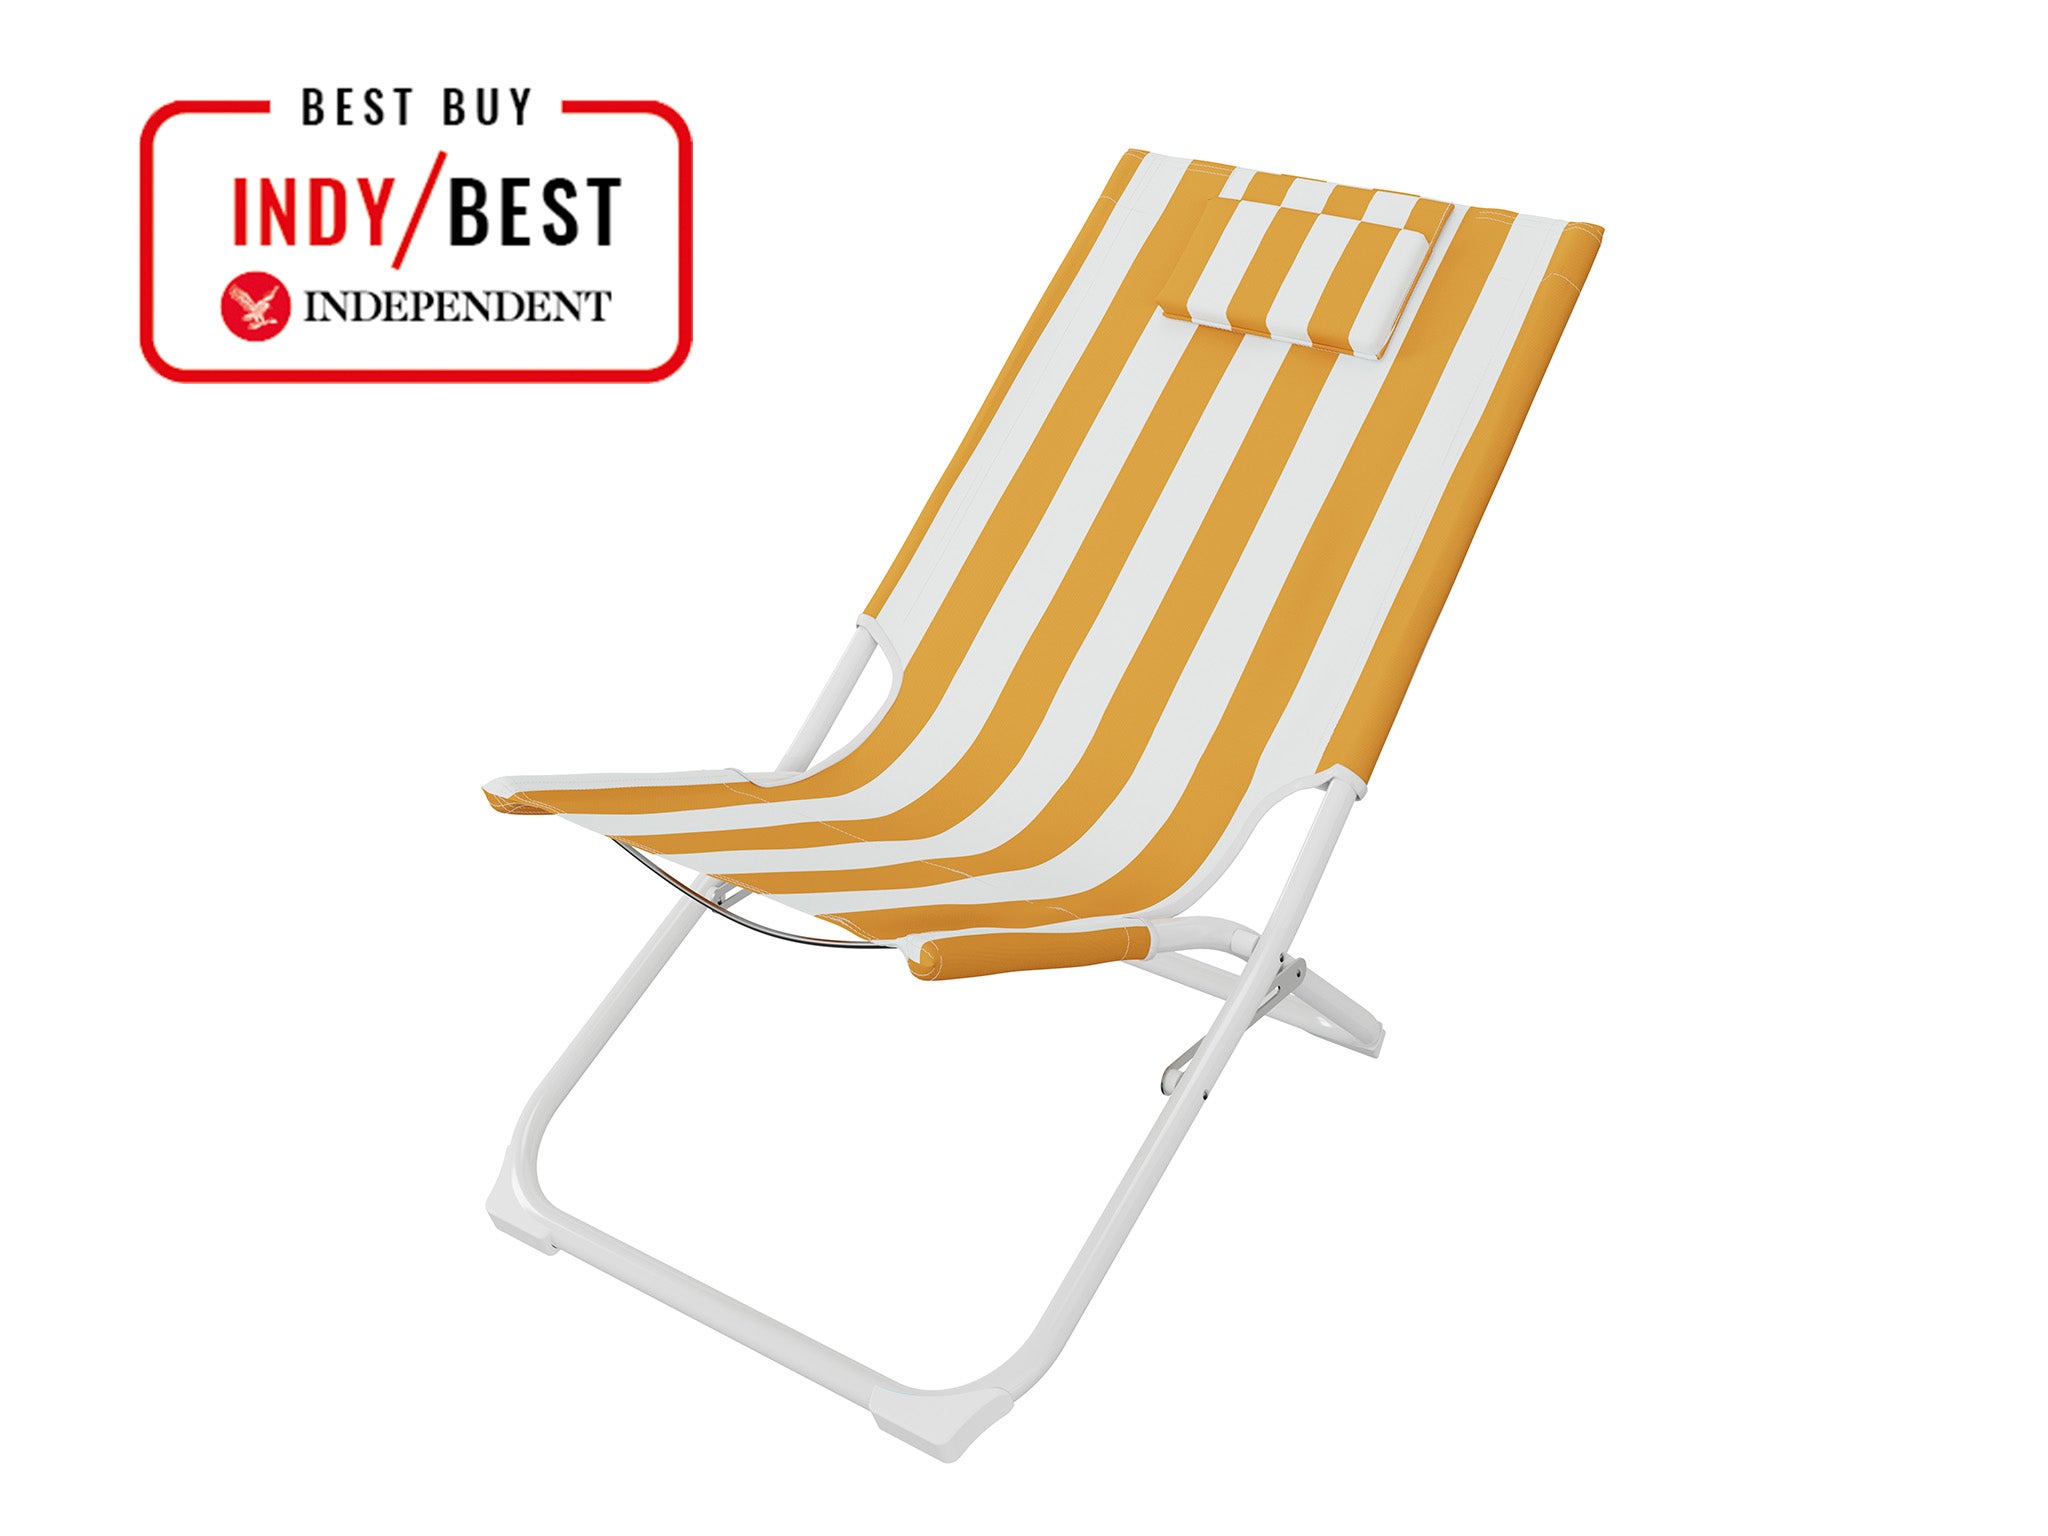 B&Q curacao golden apricot foldable cabana striped beach chair